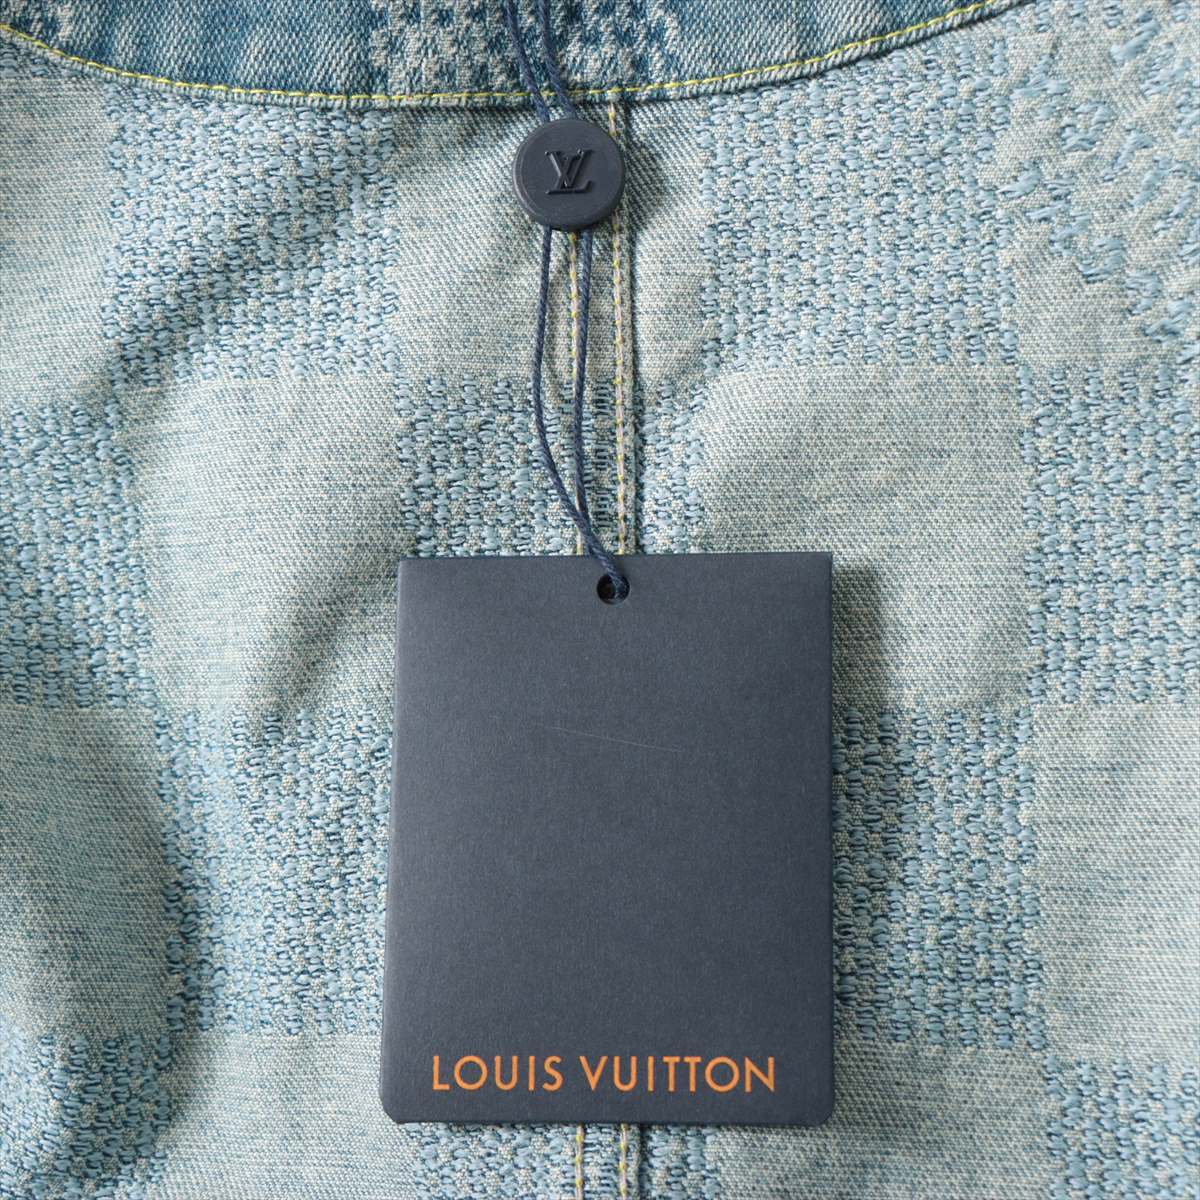 Louis Vuitton 24SS Cotton Denim Jacket 48 Mens Blue RM241 1AFHU6 Damiedenim Chic Jacket